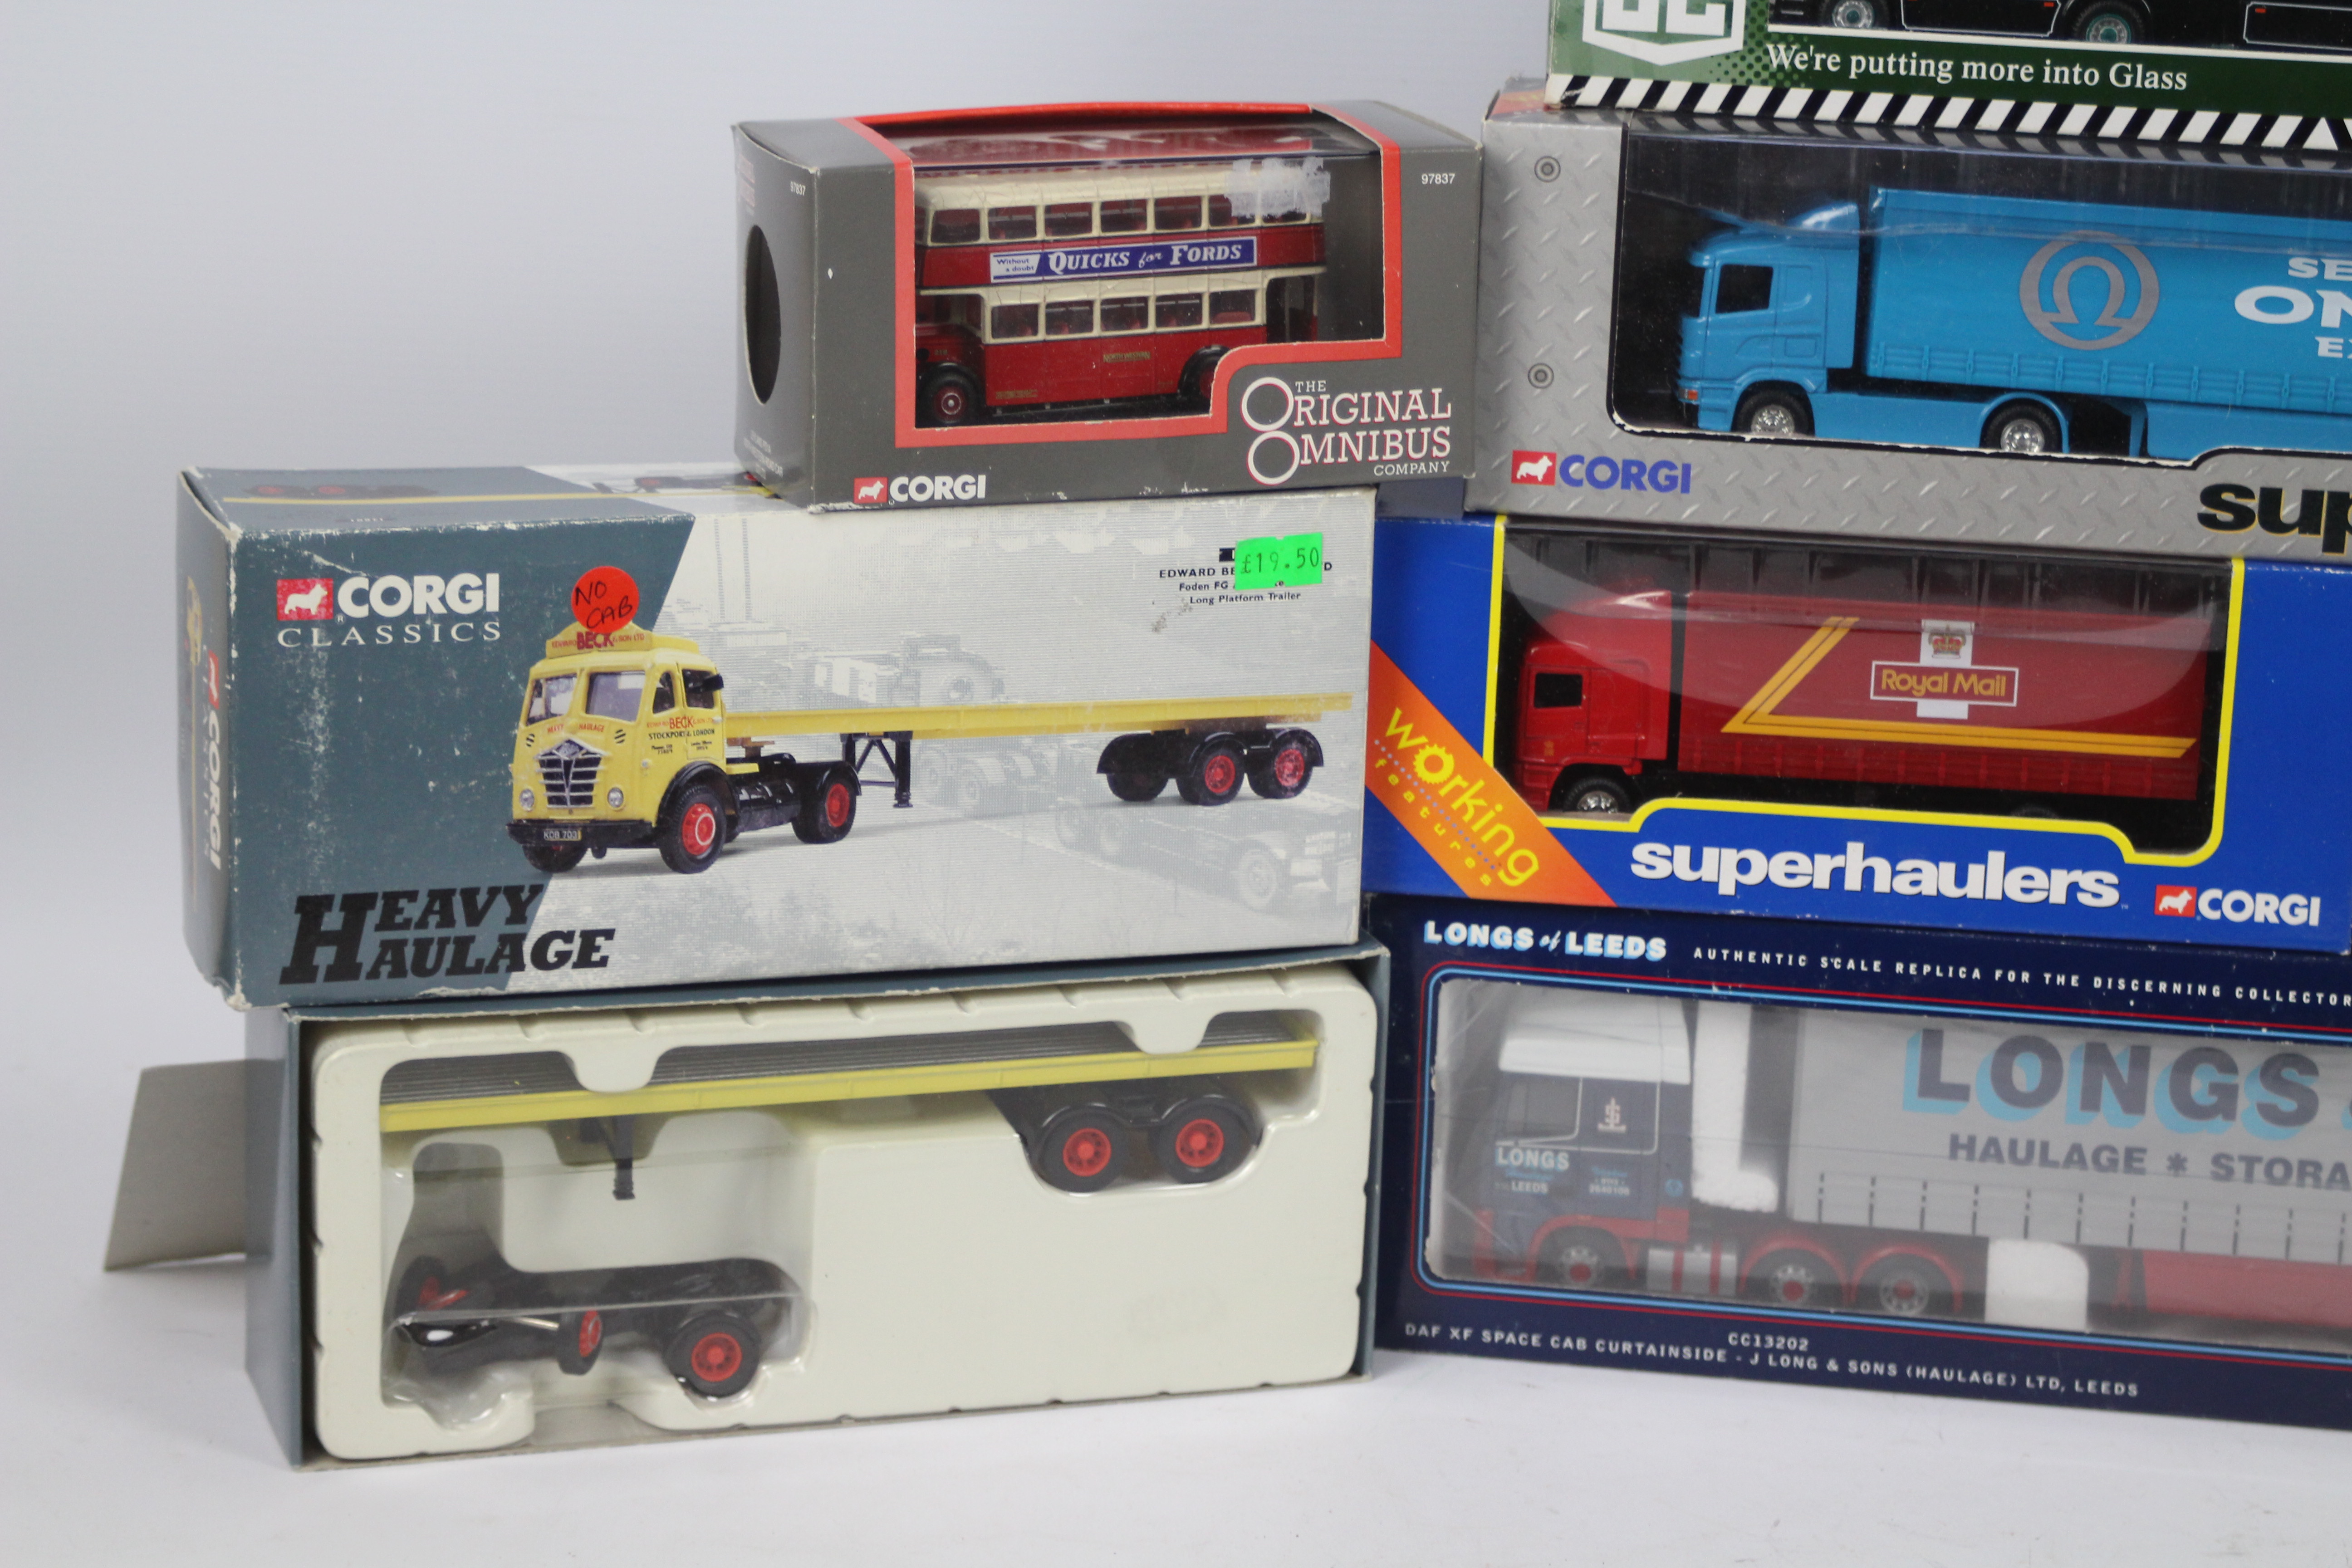 Corgi - Lledo - Richmond Toys - 8 x box vehicles including DAF XF Space Cab Curtainside # CC13202, - Image 4 of 4